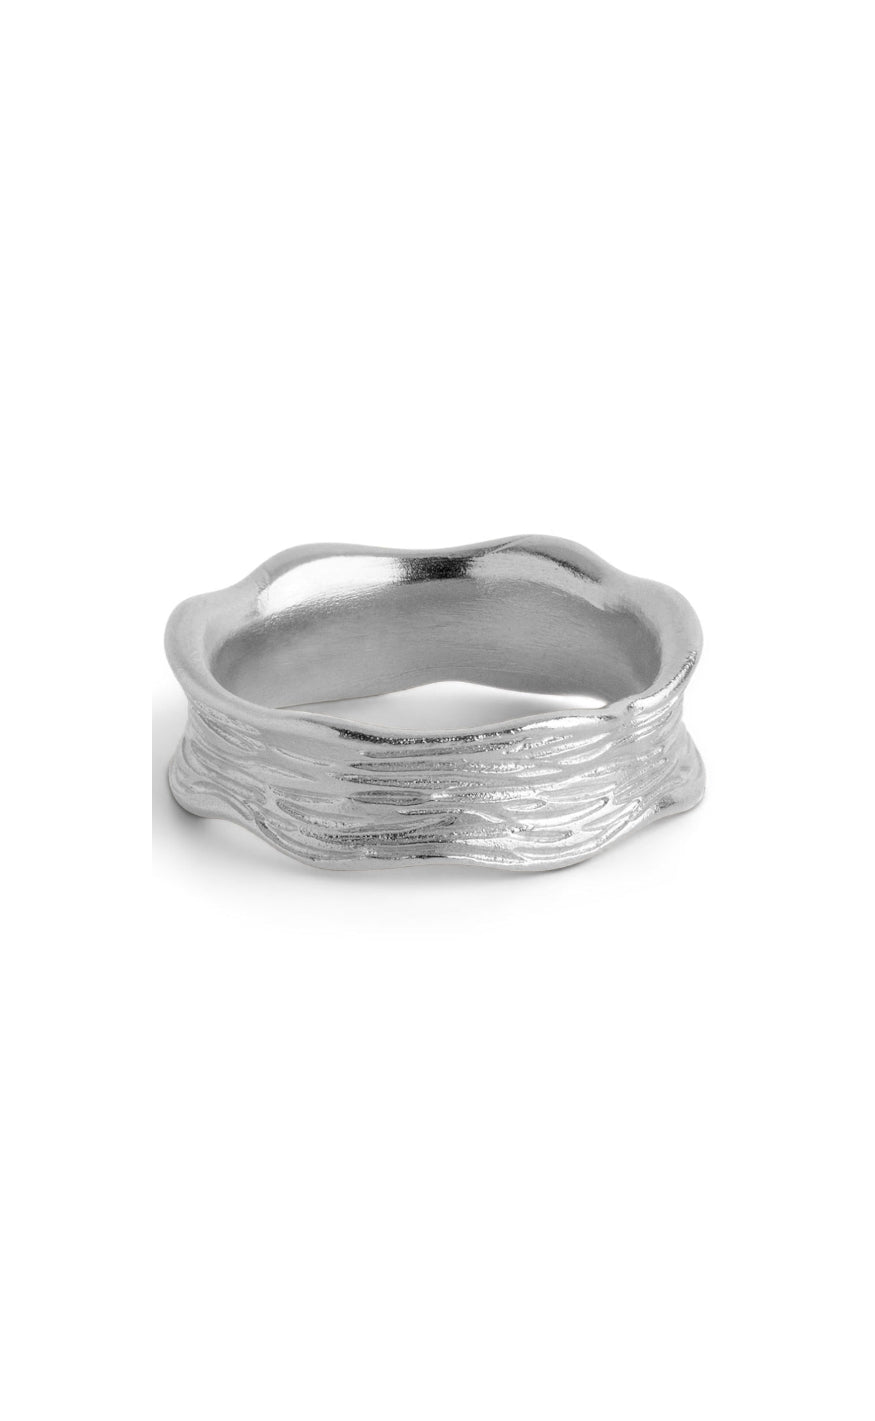 Se ENAMEL Copenhagen Ring - Ane - Silver Colour hos Fashionbystrand